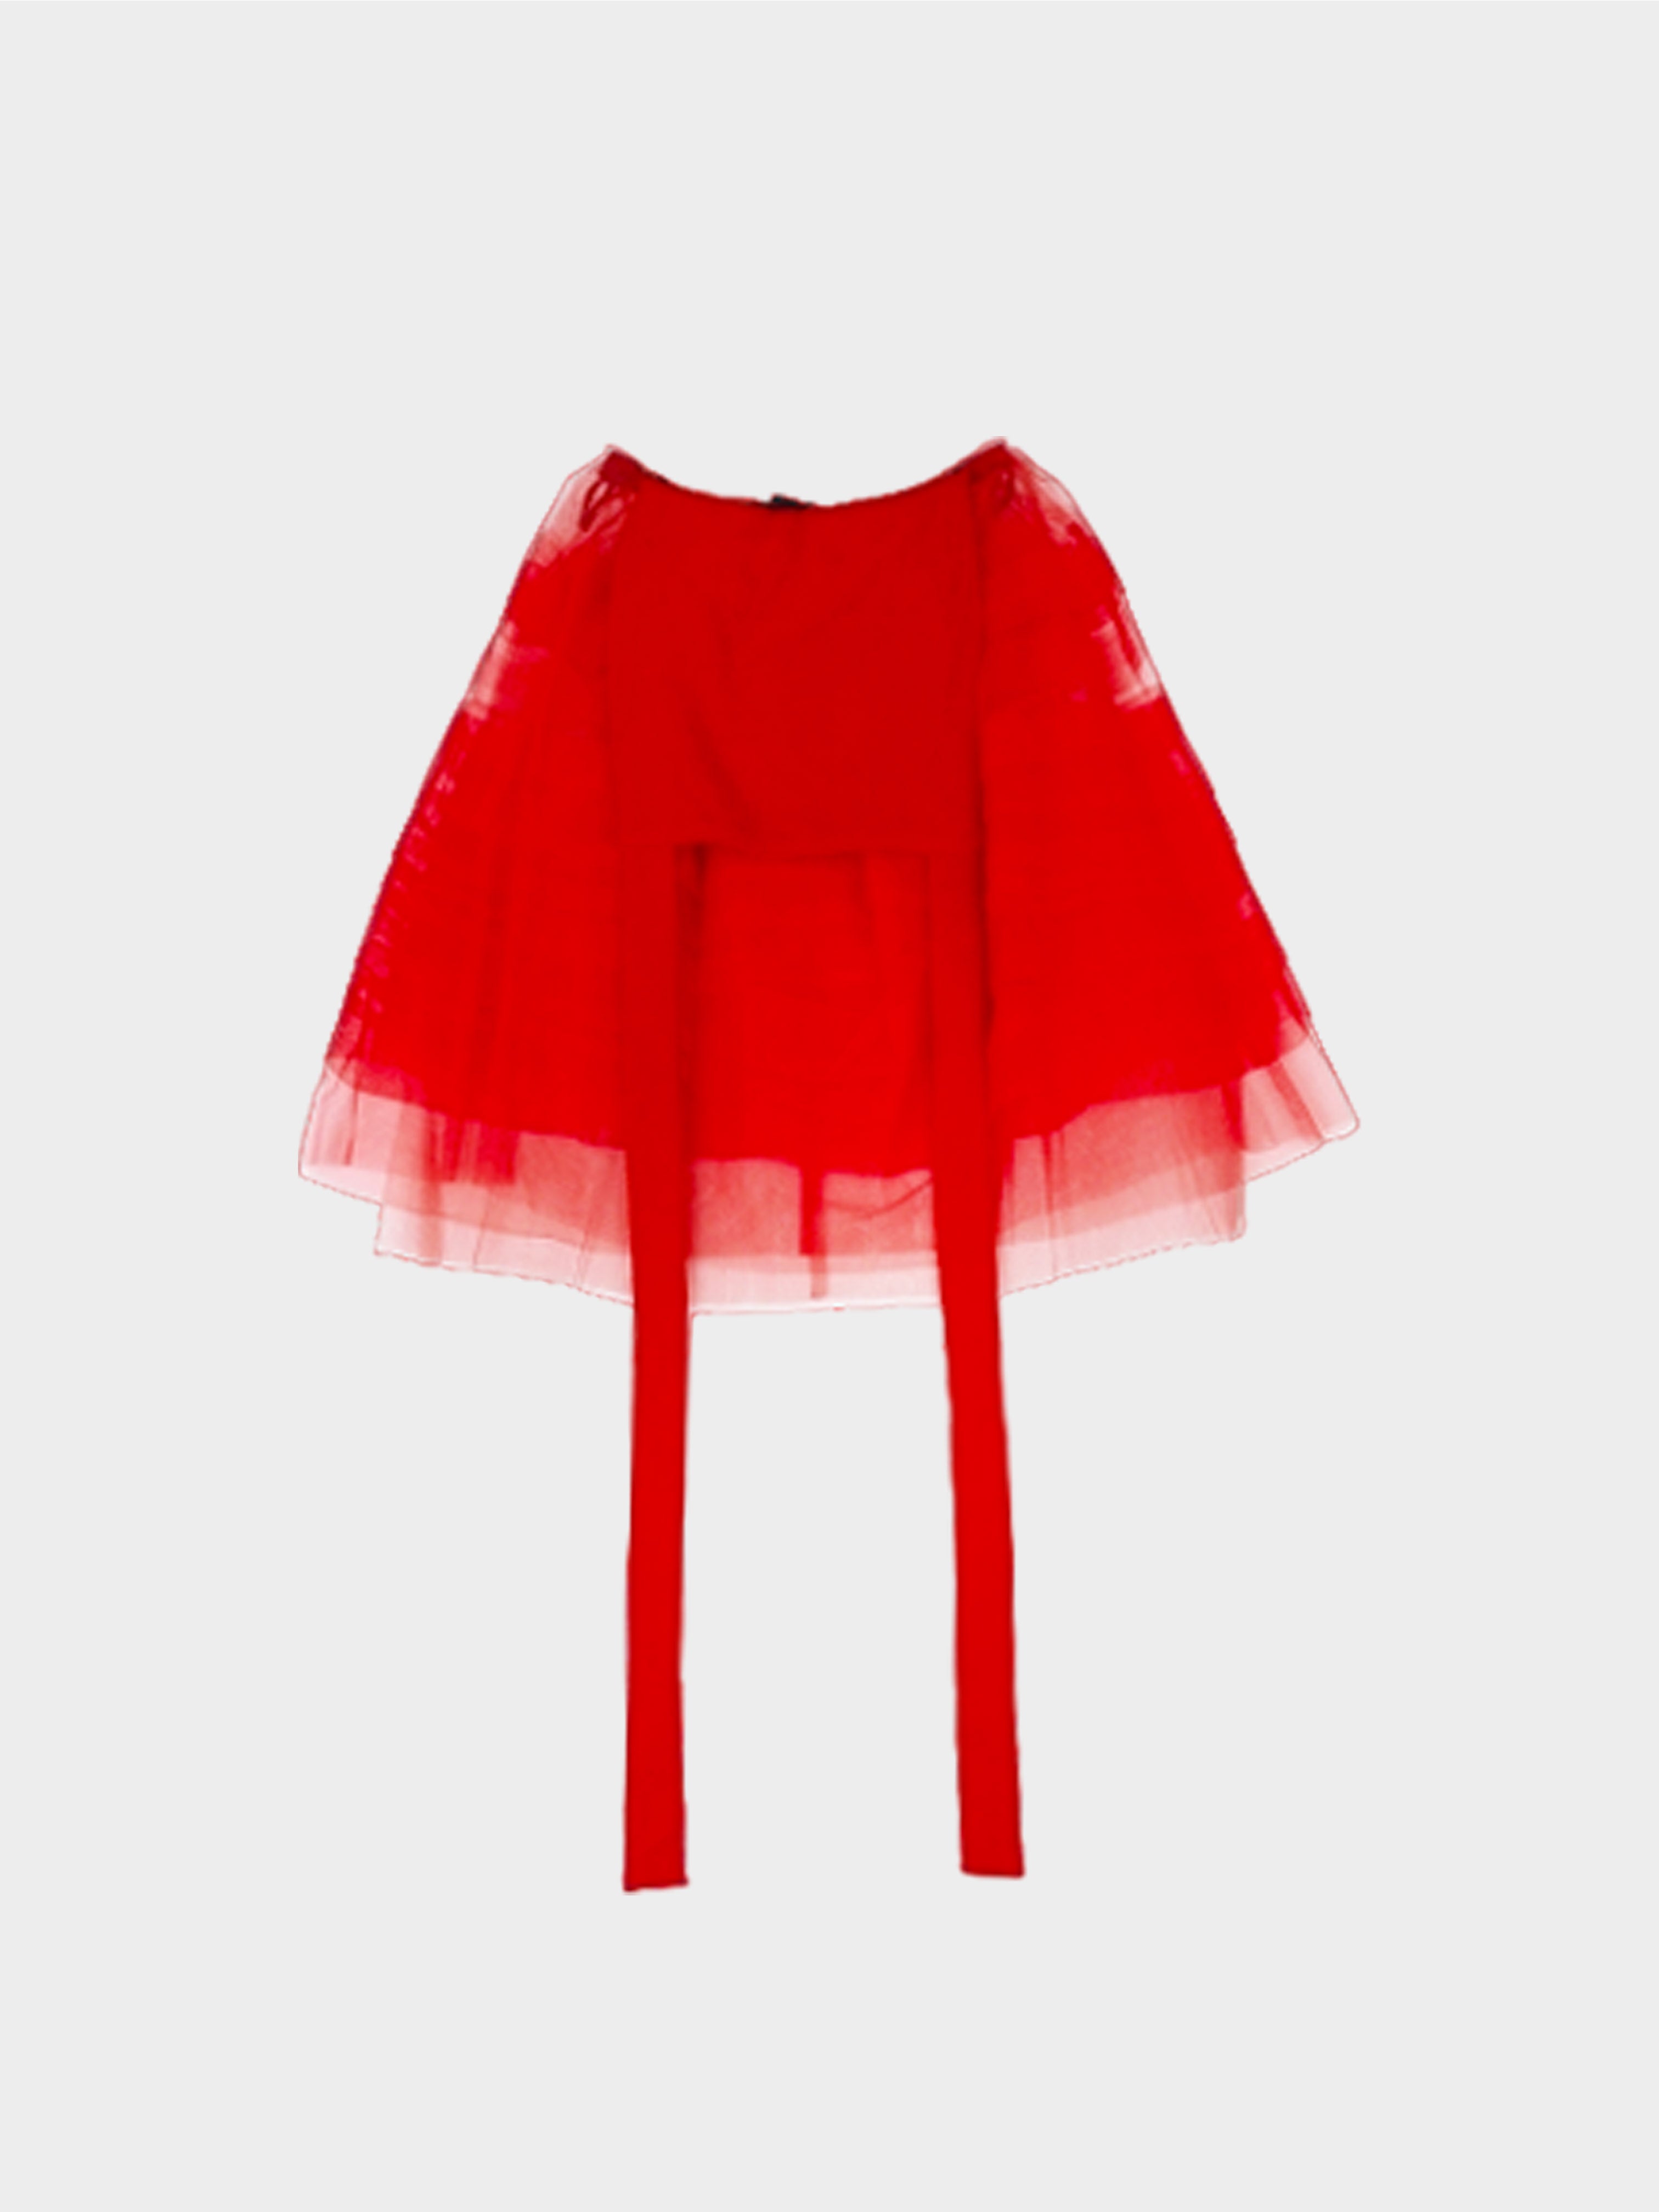 Comme des Garçons 2010s Red Ruffled Tulle Dress